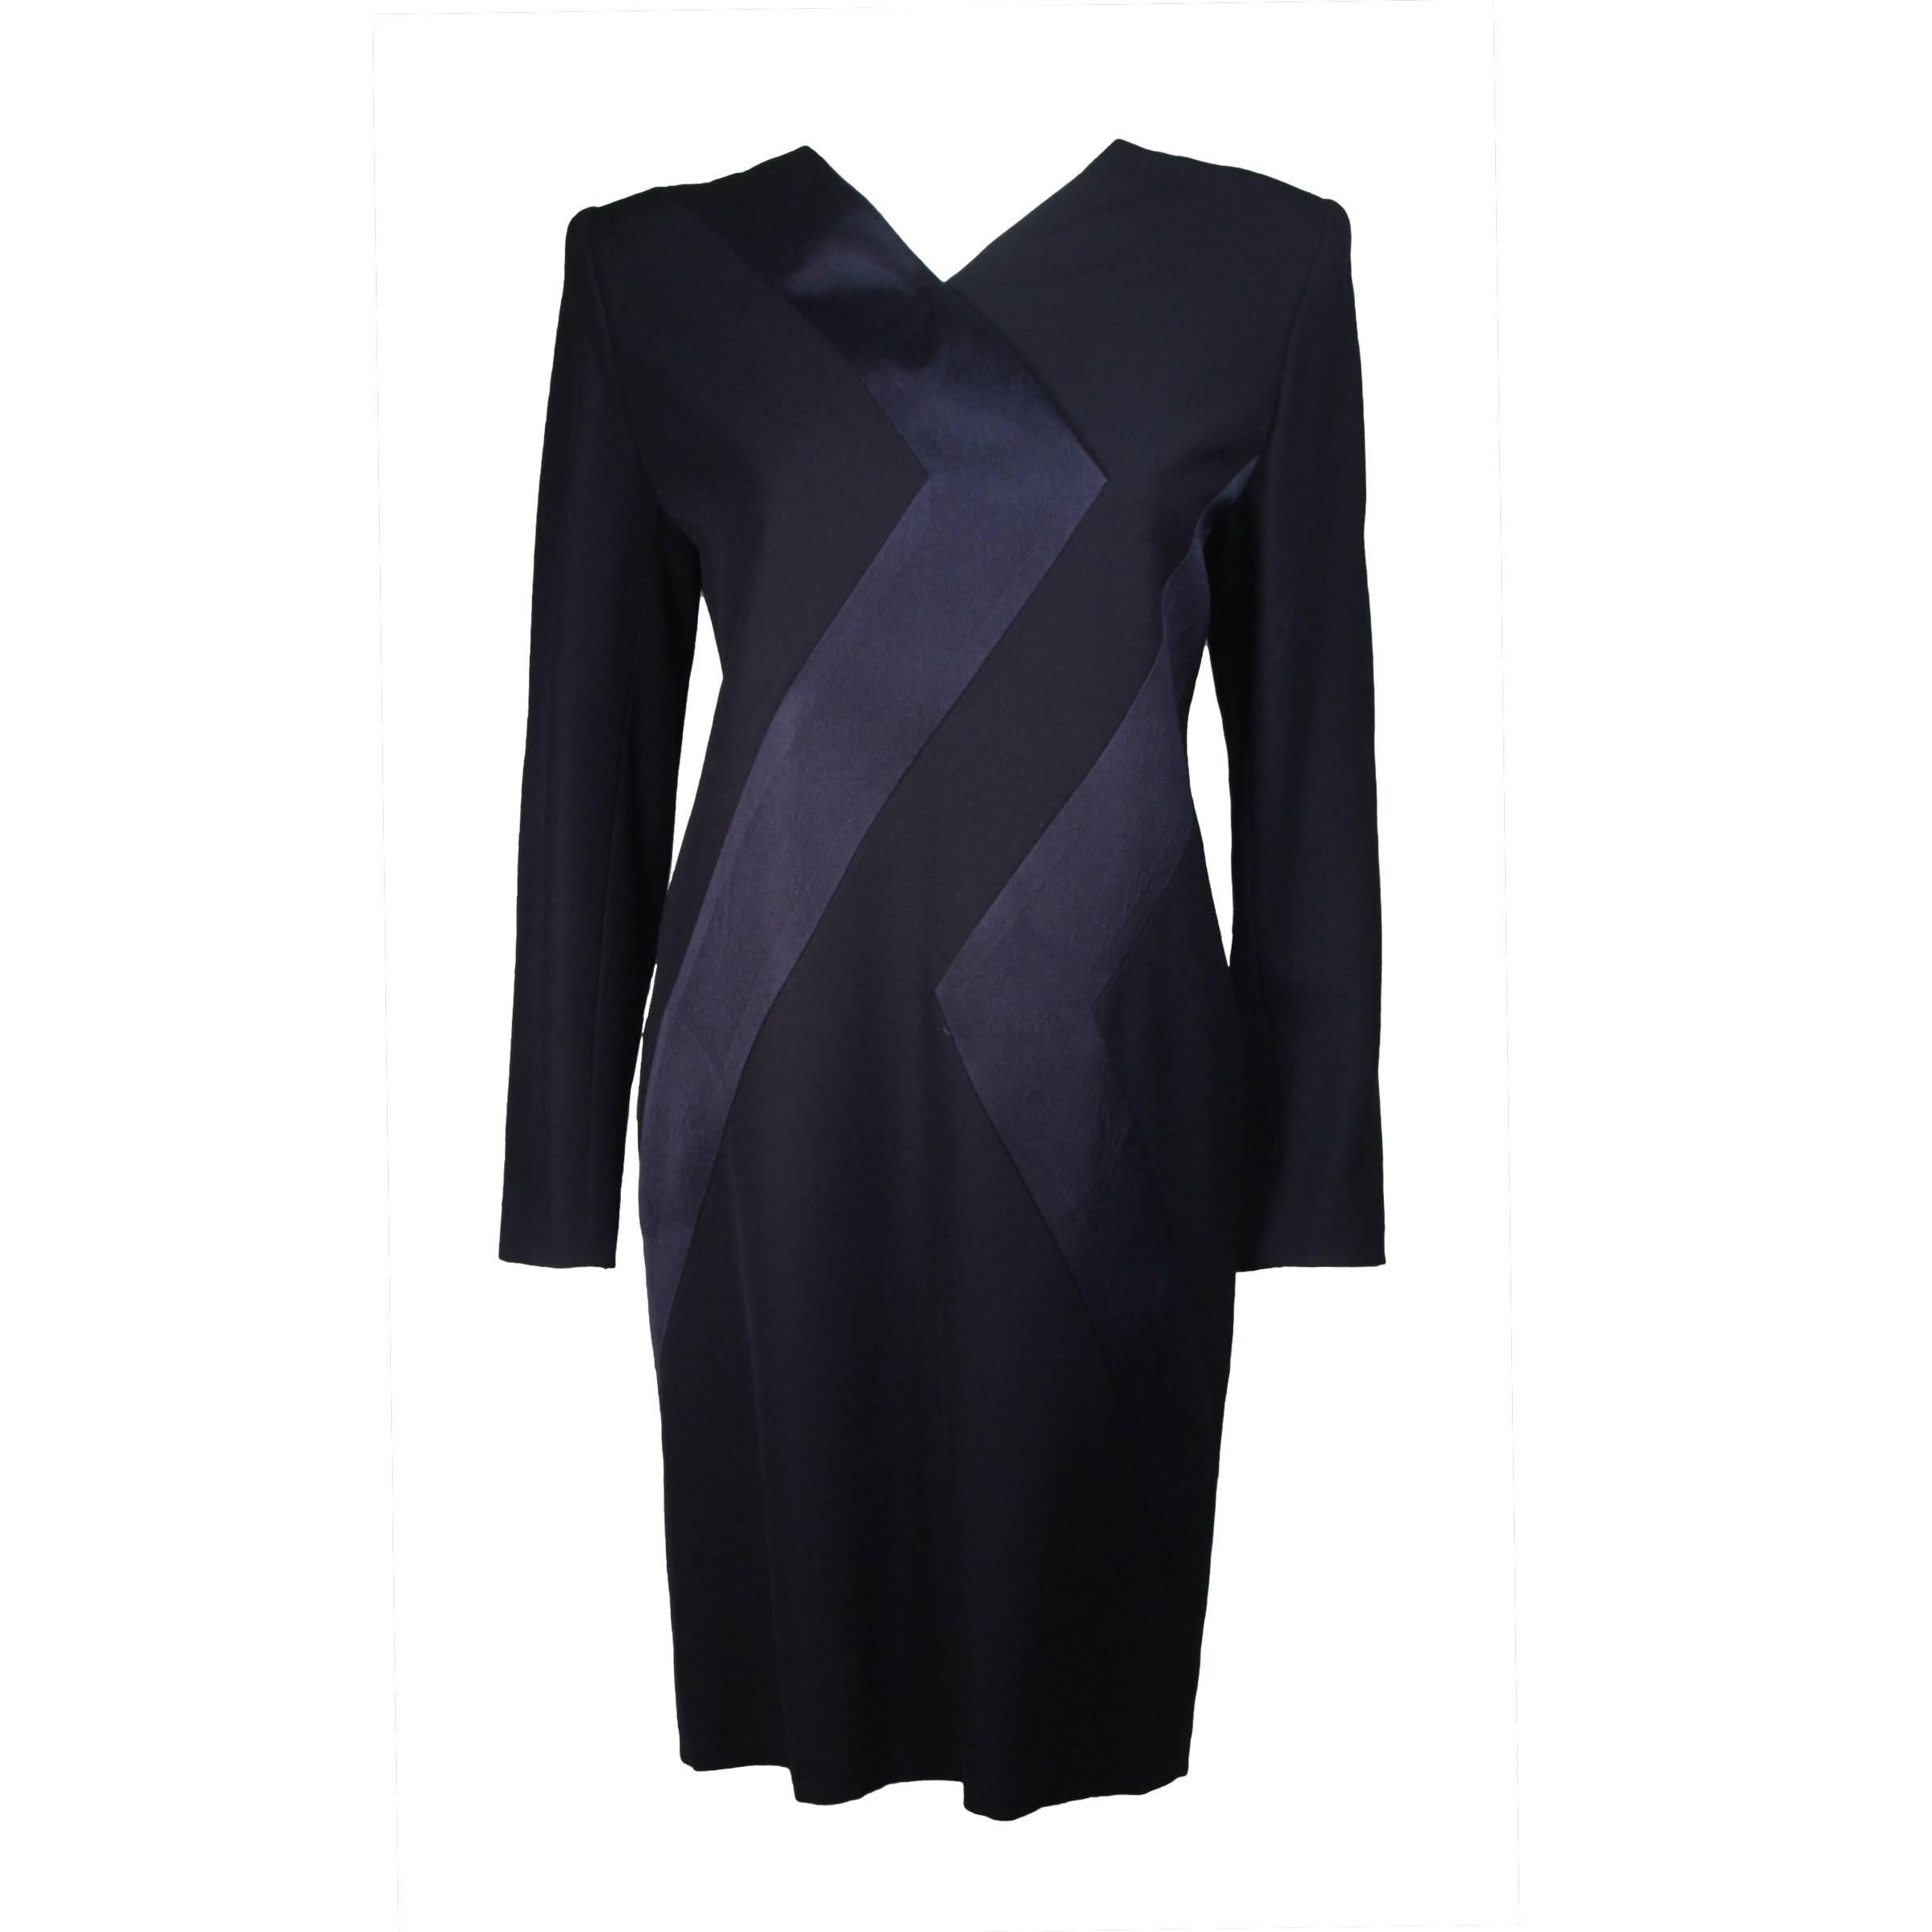 Galanos Navy Silk Cocktail Dress with Geometric Design Size Small Medium